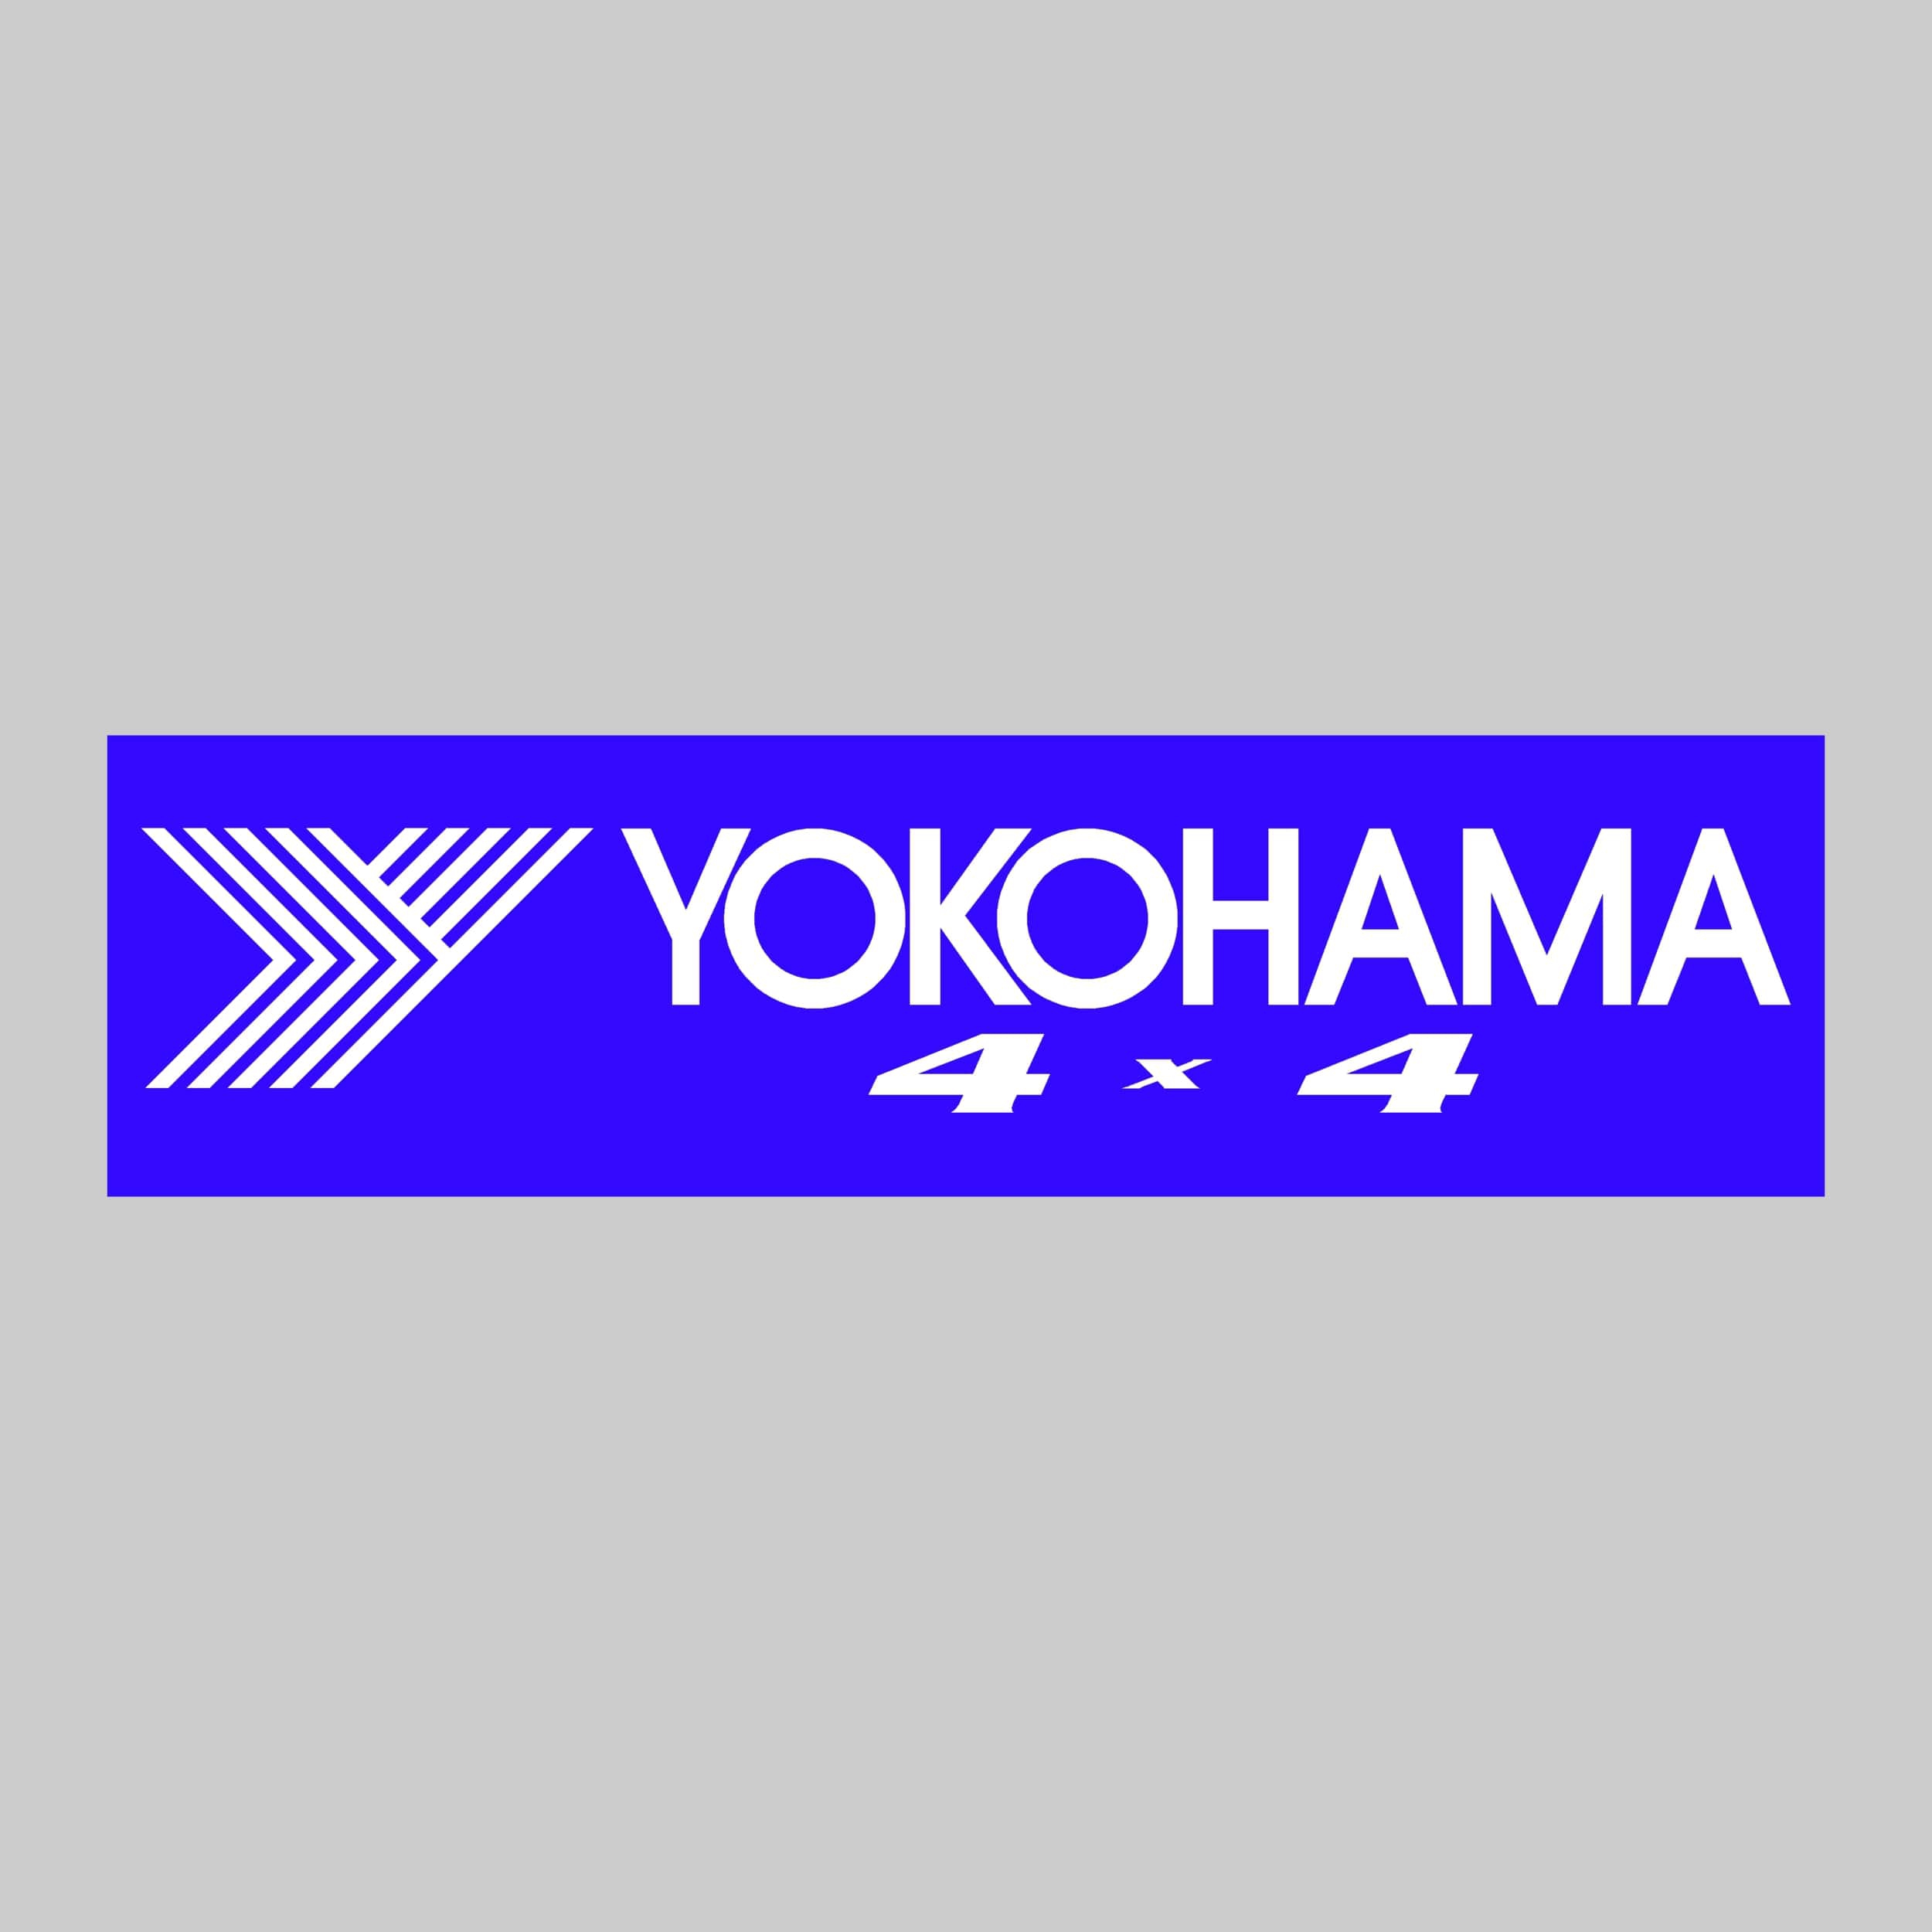 stickers-yokohama-ref-2-tuning-audio-4x4-sonorisation-car-auto-moto-camion-competition-deco-rallye-autocollant-min